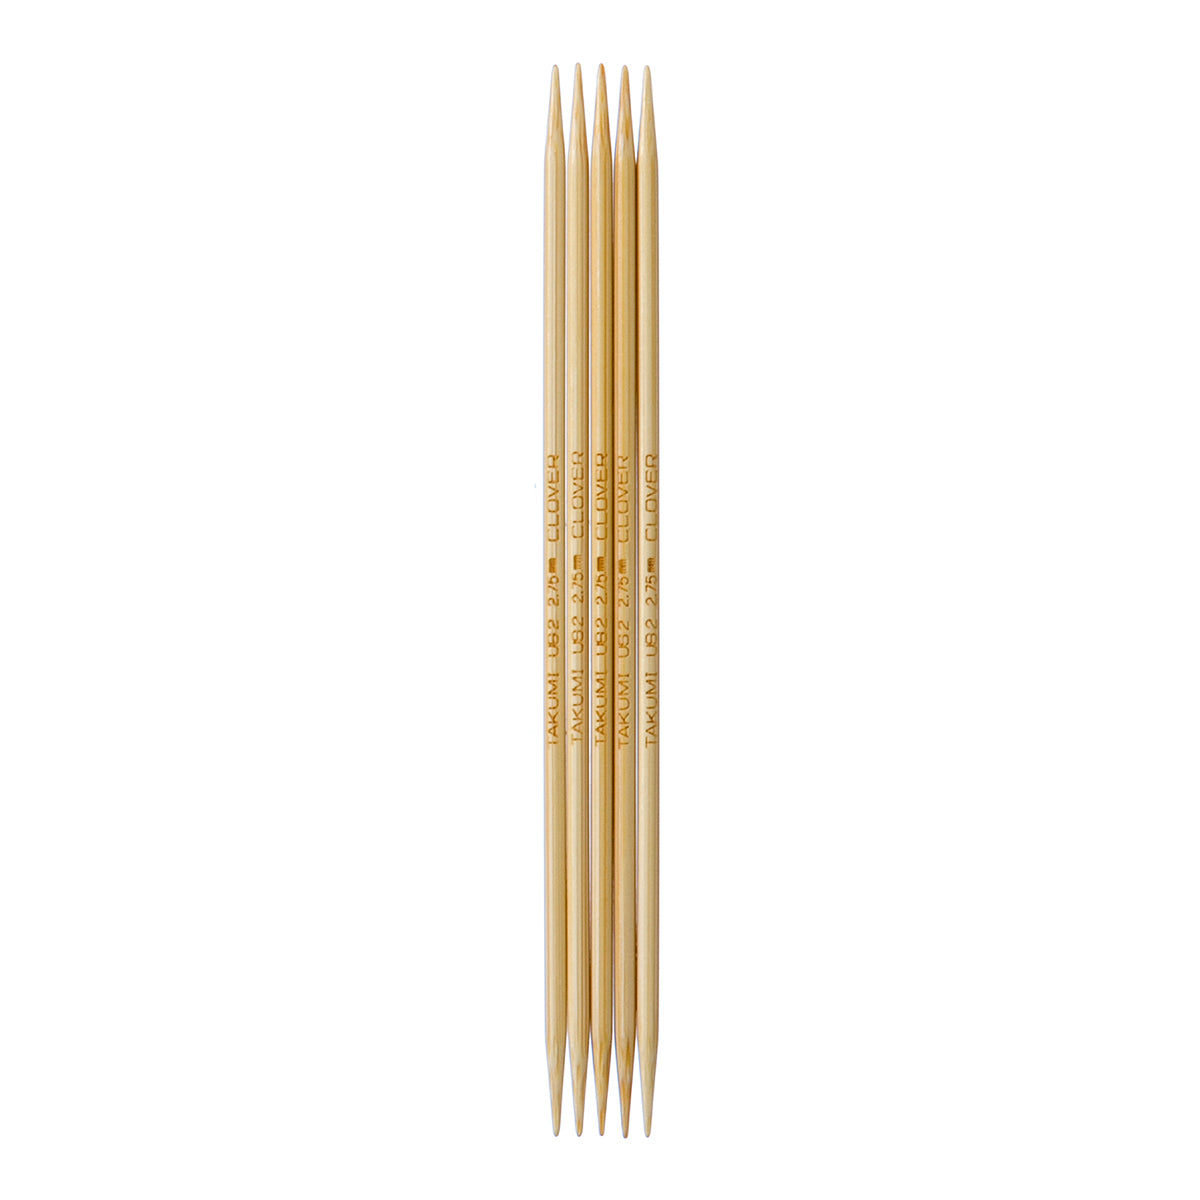 Clover Bamboo No. 9 Single Point Knitting Needles - 5.5 mm 13